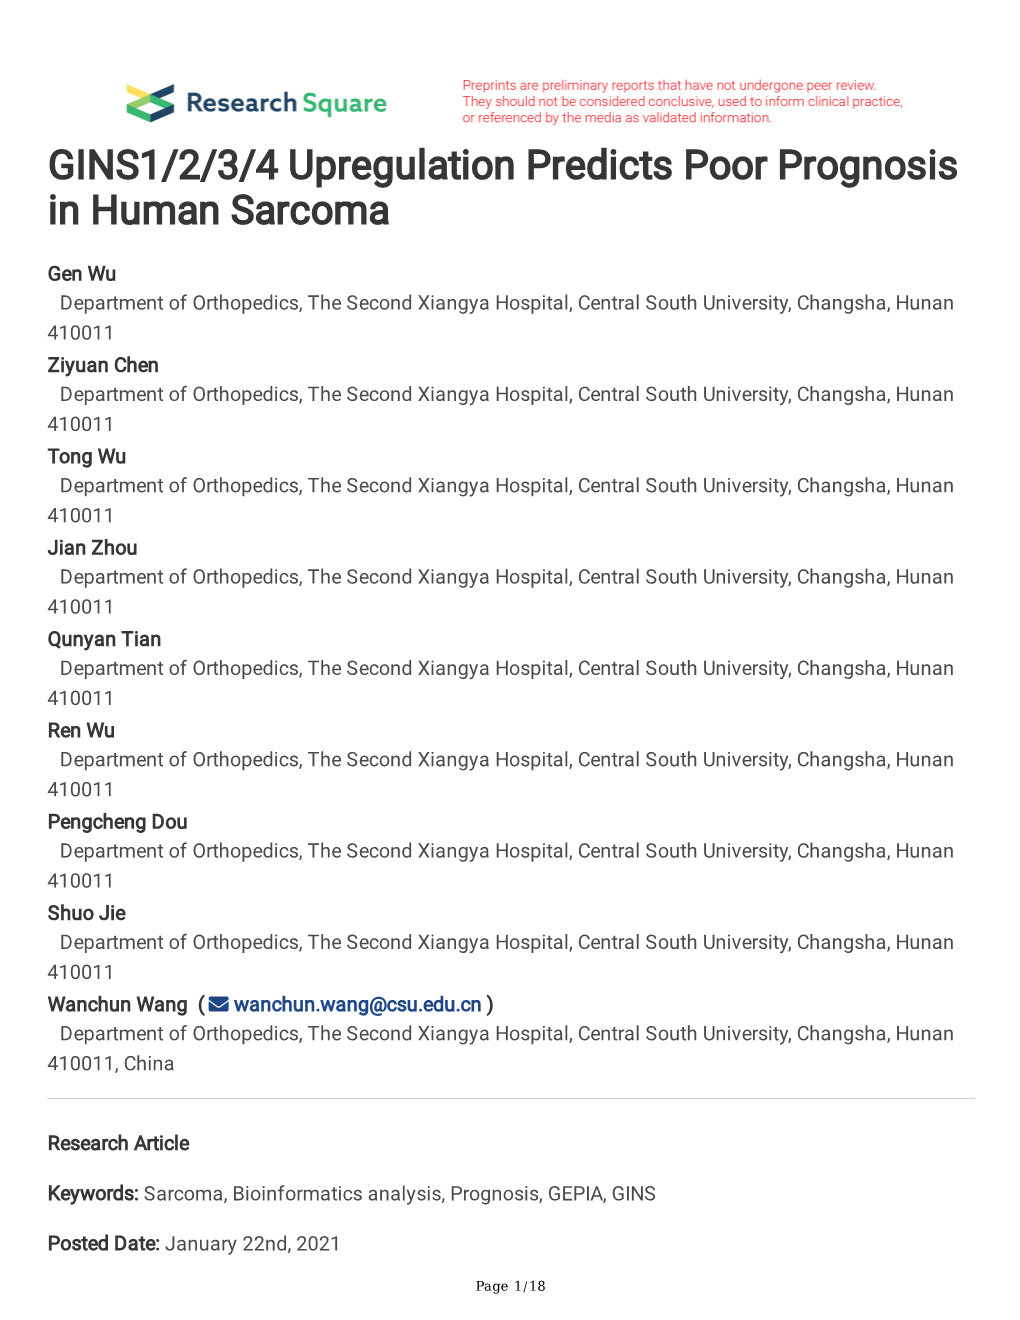 GINS1/2/3/4 Upregulation Predicts Poor Prognosis in Human Sarcoma